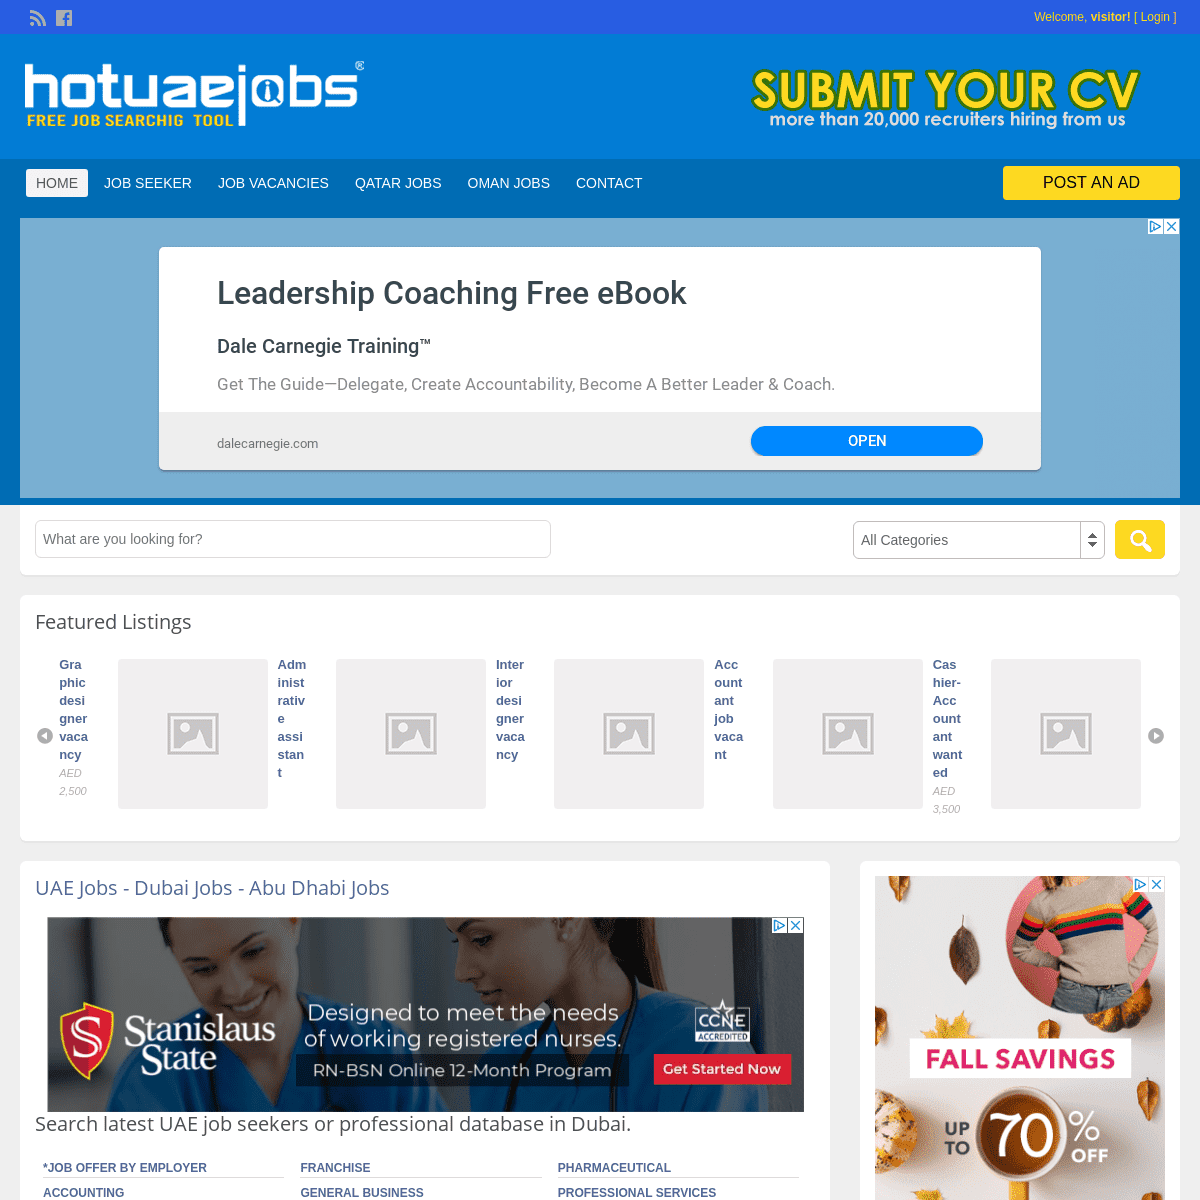 A complete backup of hotuaejobs.com